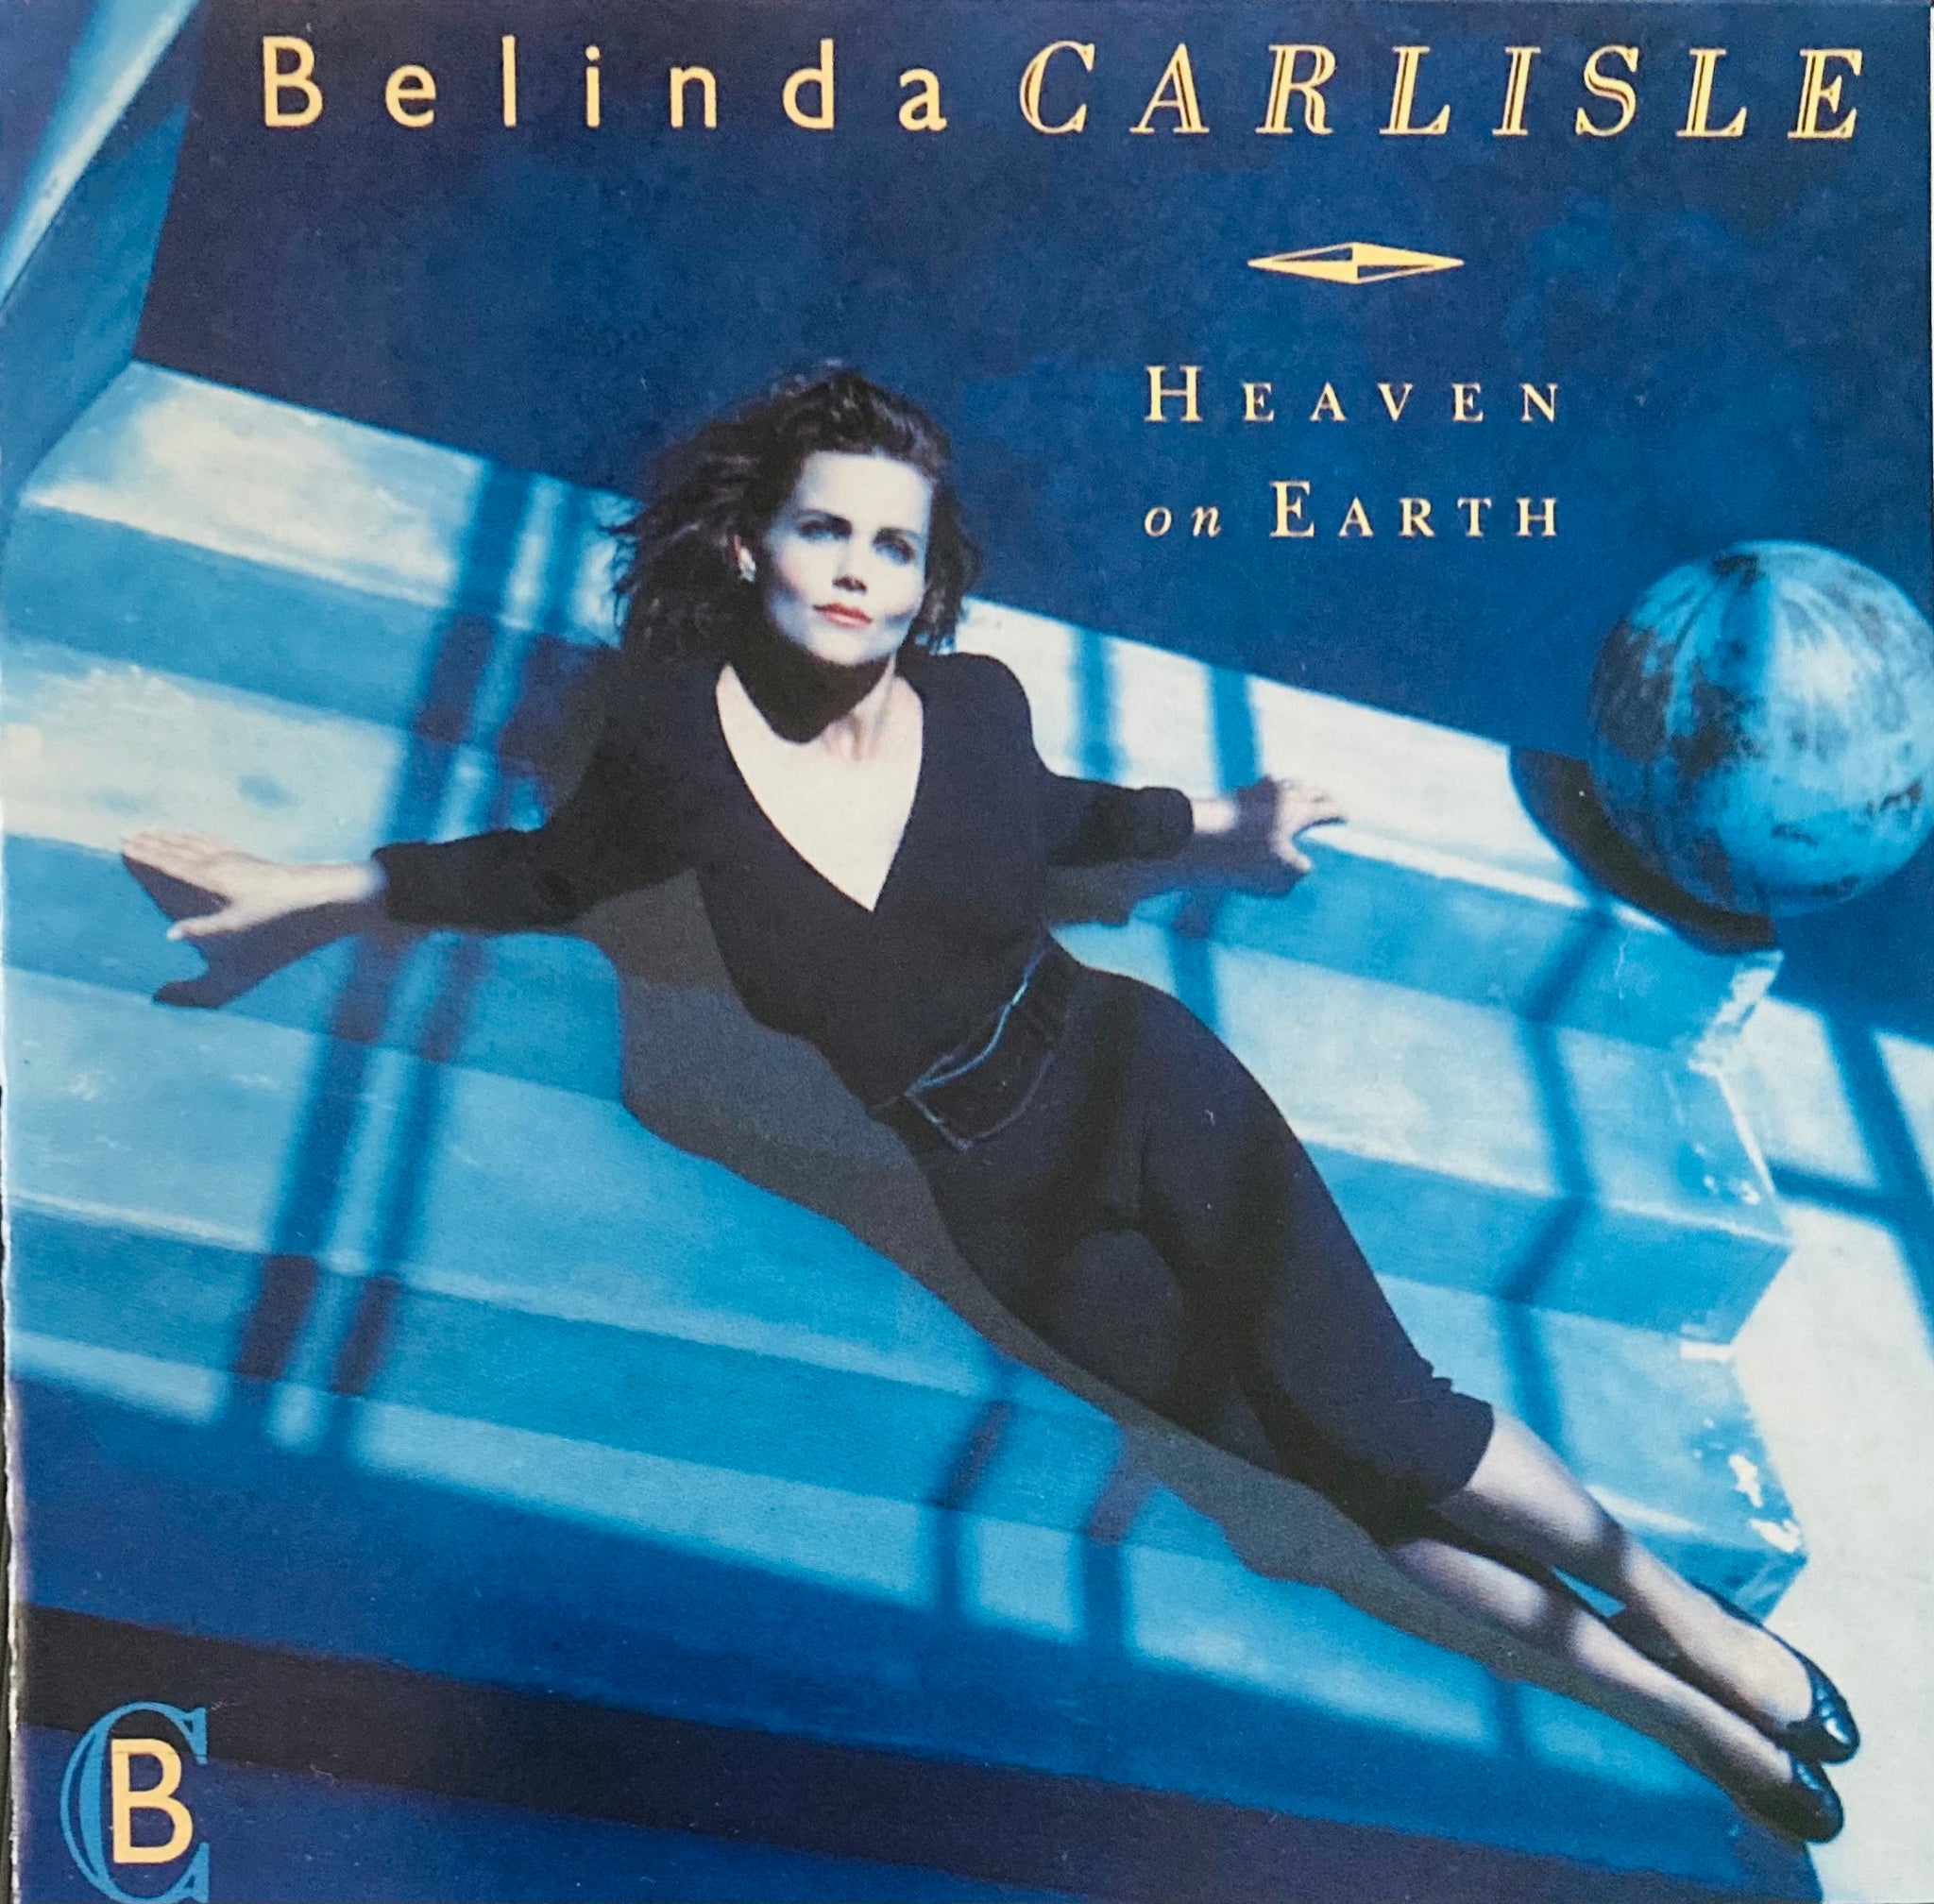 Belinda Carlisle “Heaven On Earth” CD (1987)